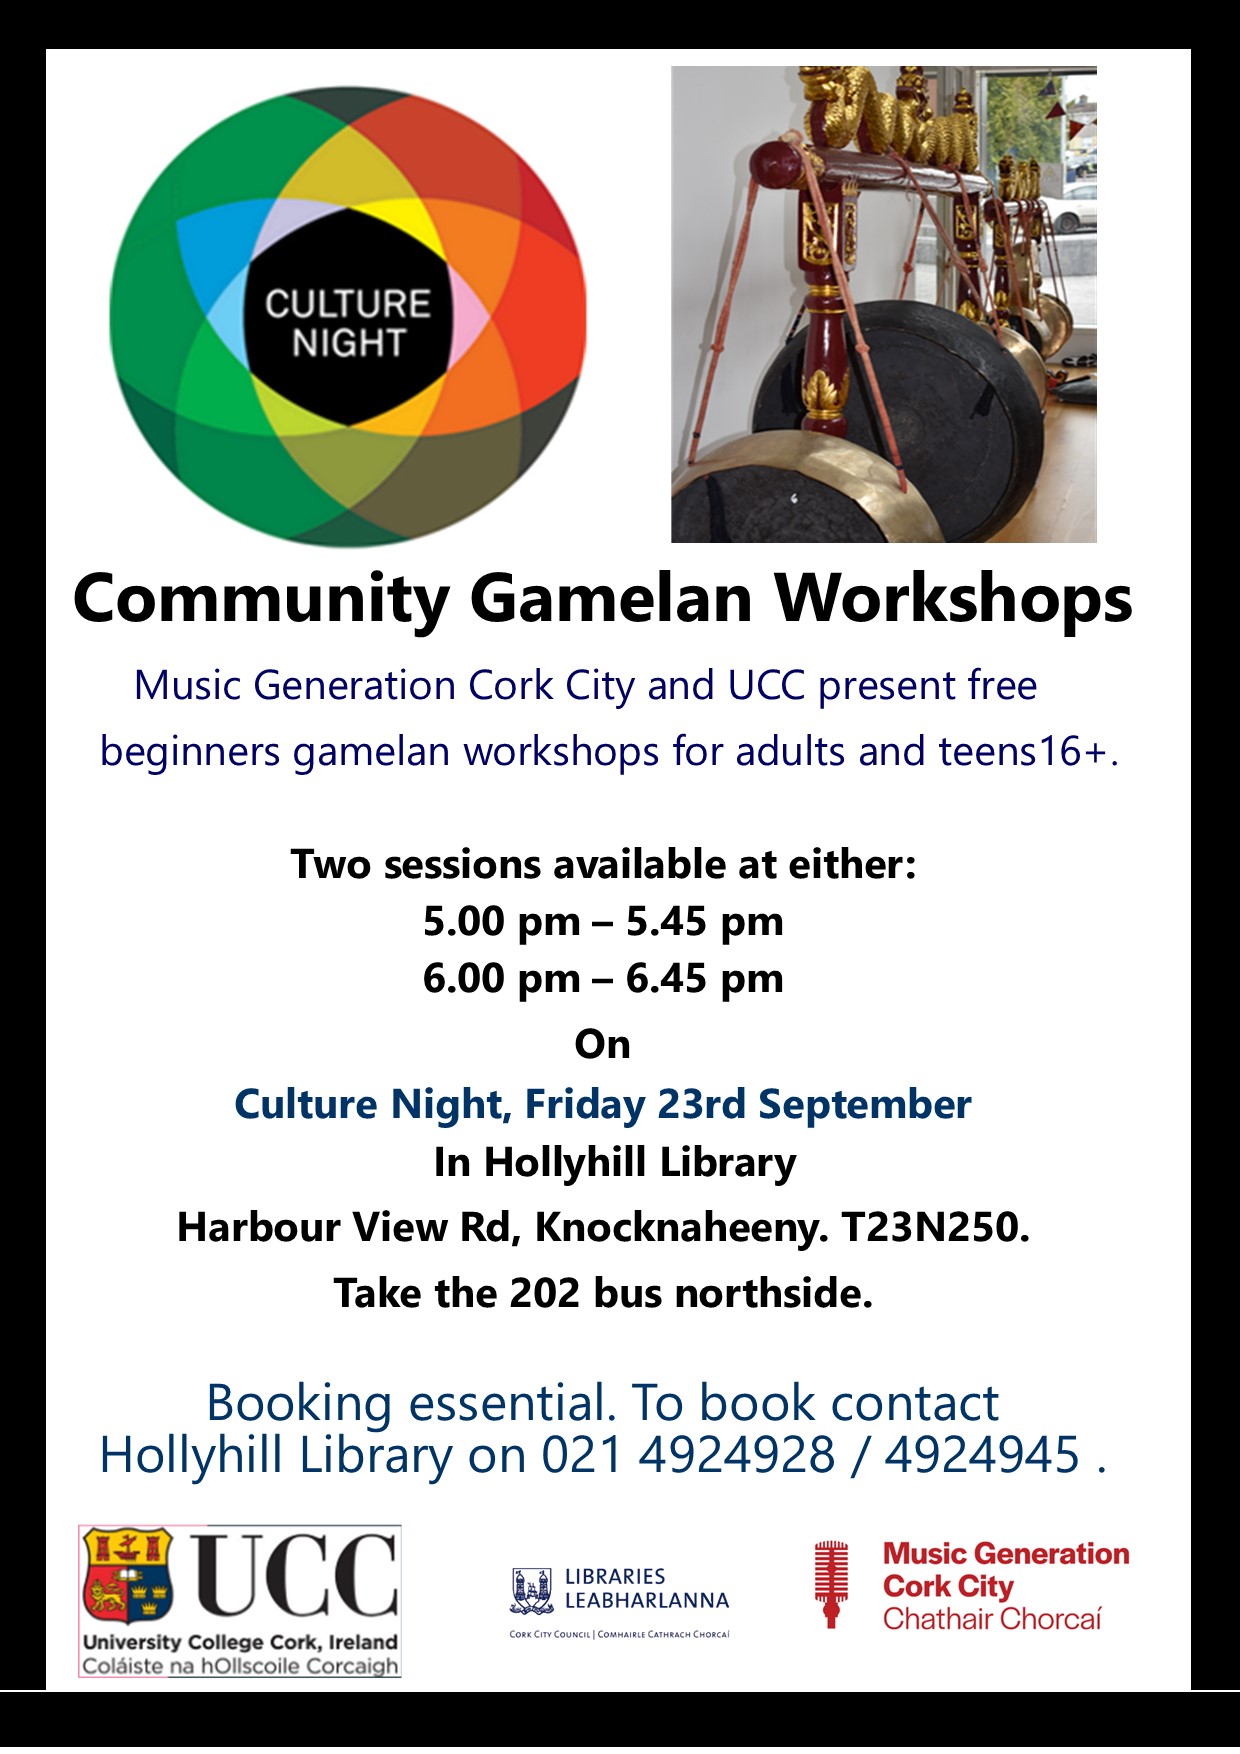 UCC-Music Generation Cork City COMMUNITY GAMELAN